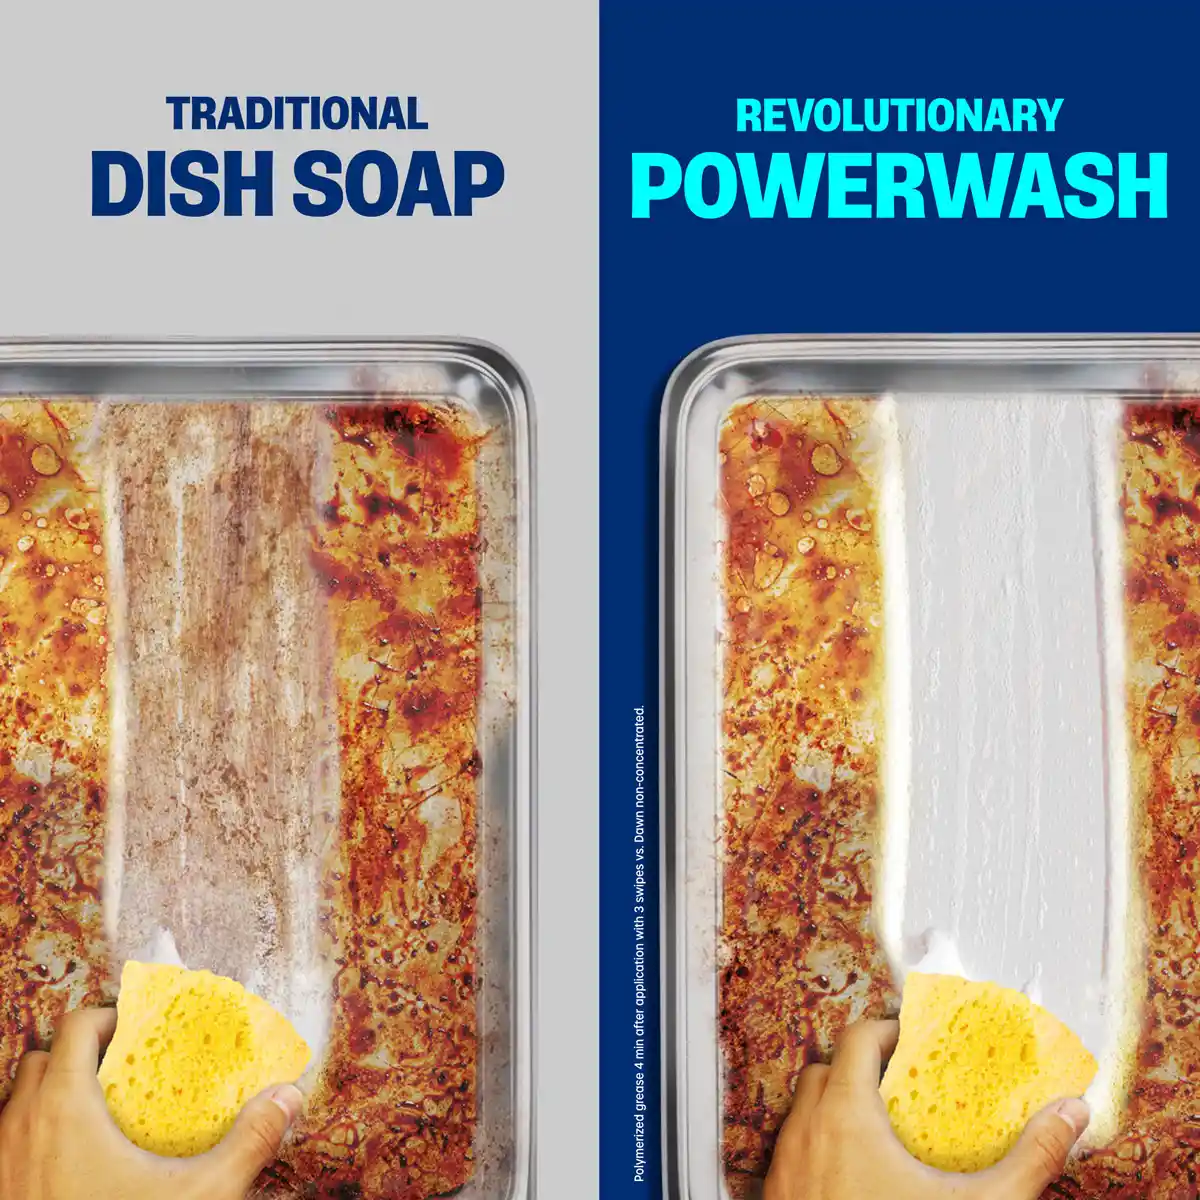 Dawn Powerwash - Traditional dish soap, revolutionary powerwash